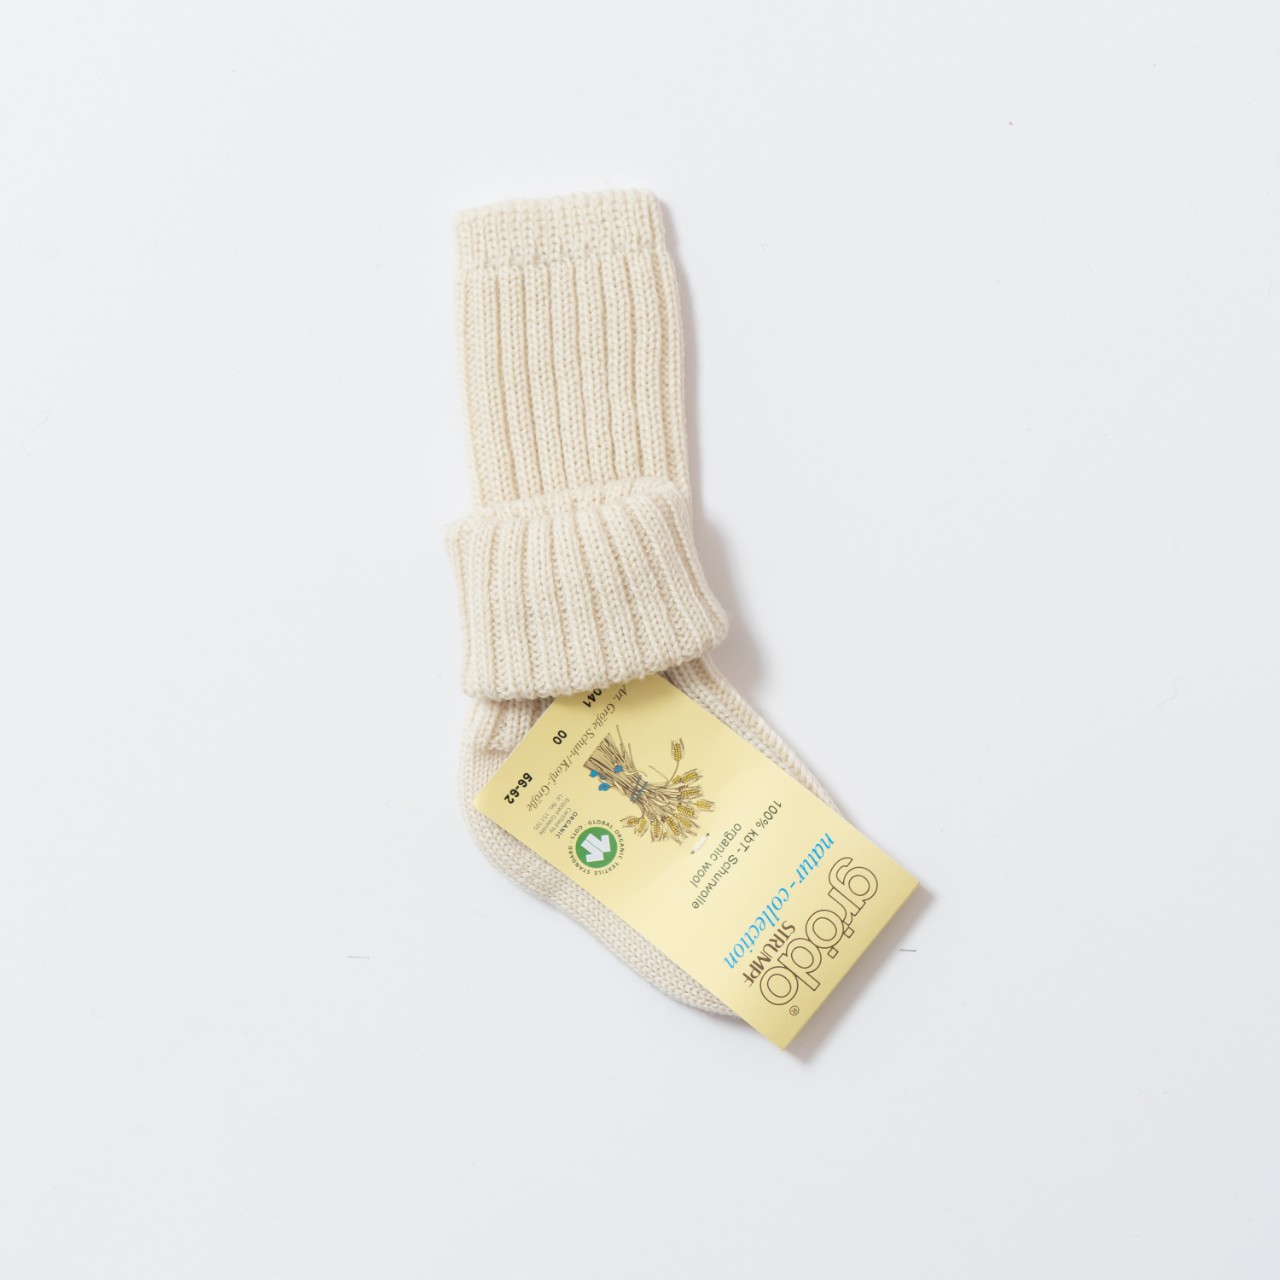 MERINO SOCKS - Beige Chaussettes chaudes en laine Merinos